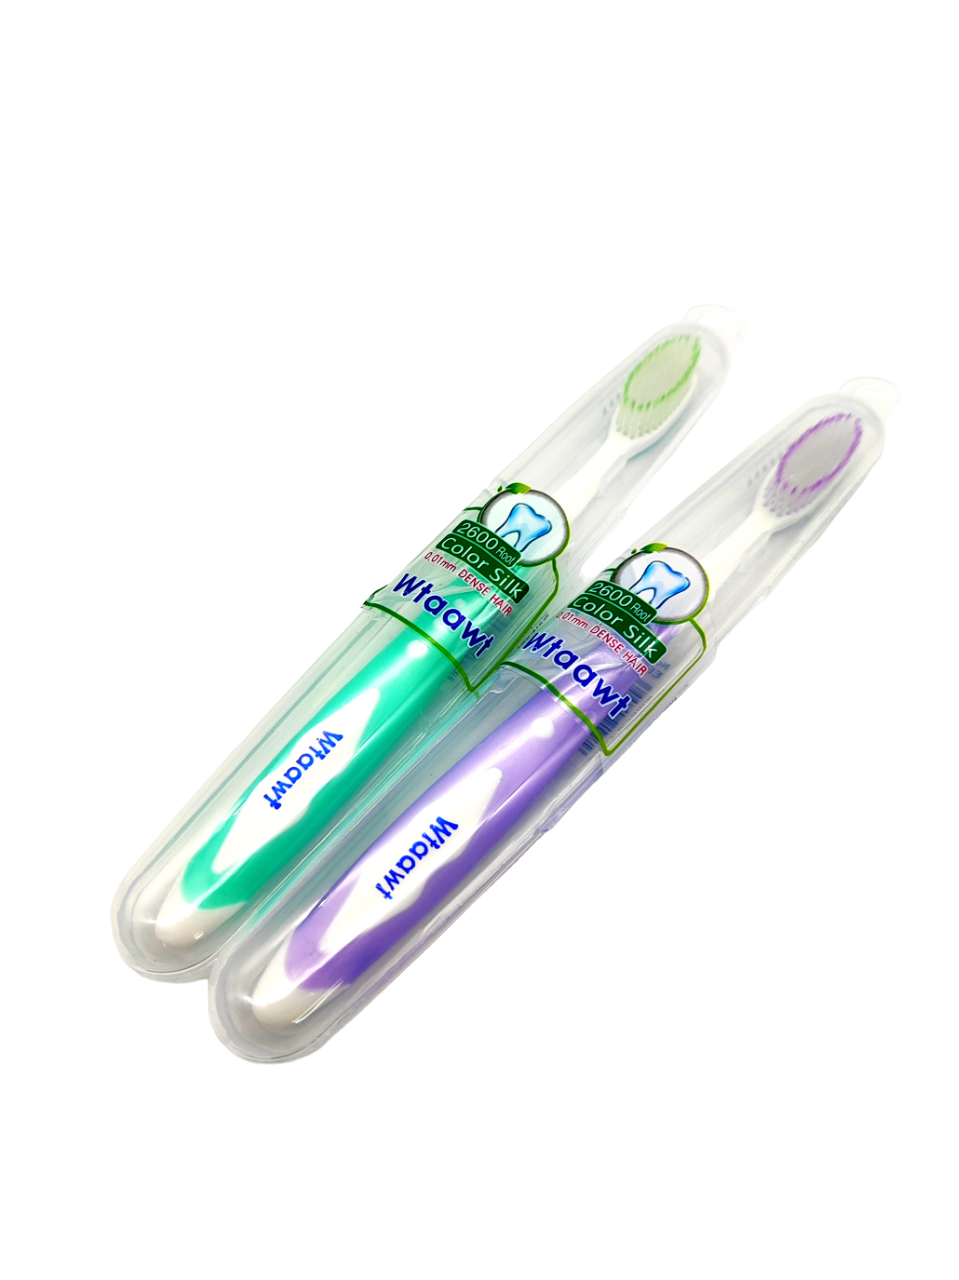 Комплект зубных щеток Wtaawt в футляре Цвет зеленый-фиолетовый 2 шт. комплект зубных паст montcarotte